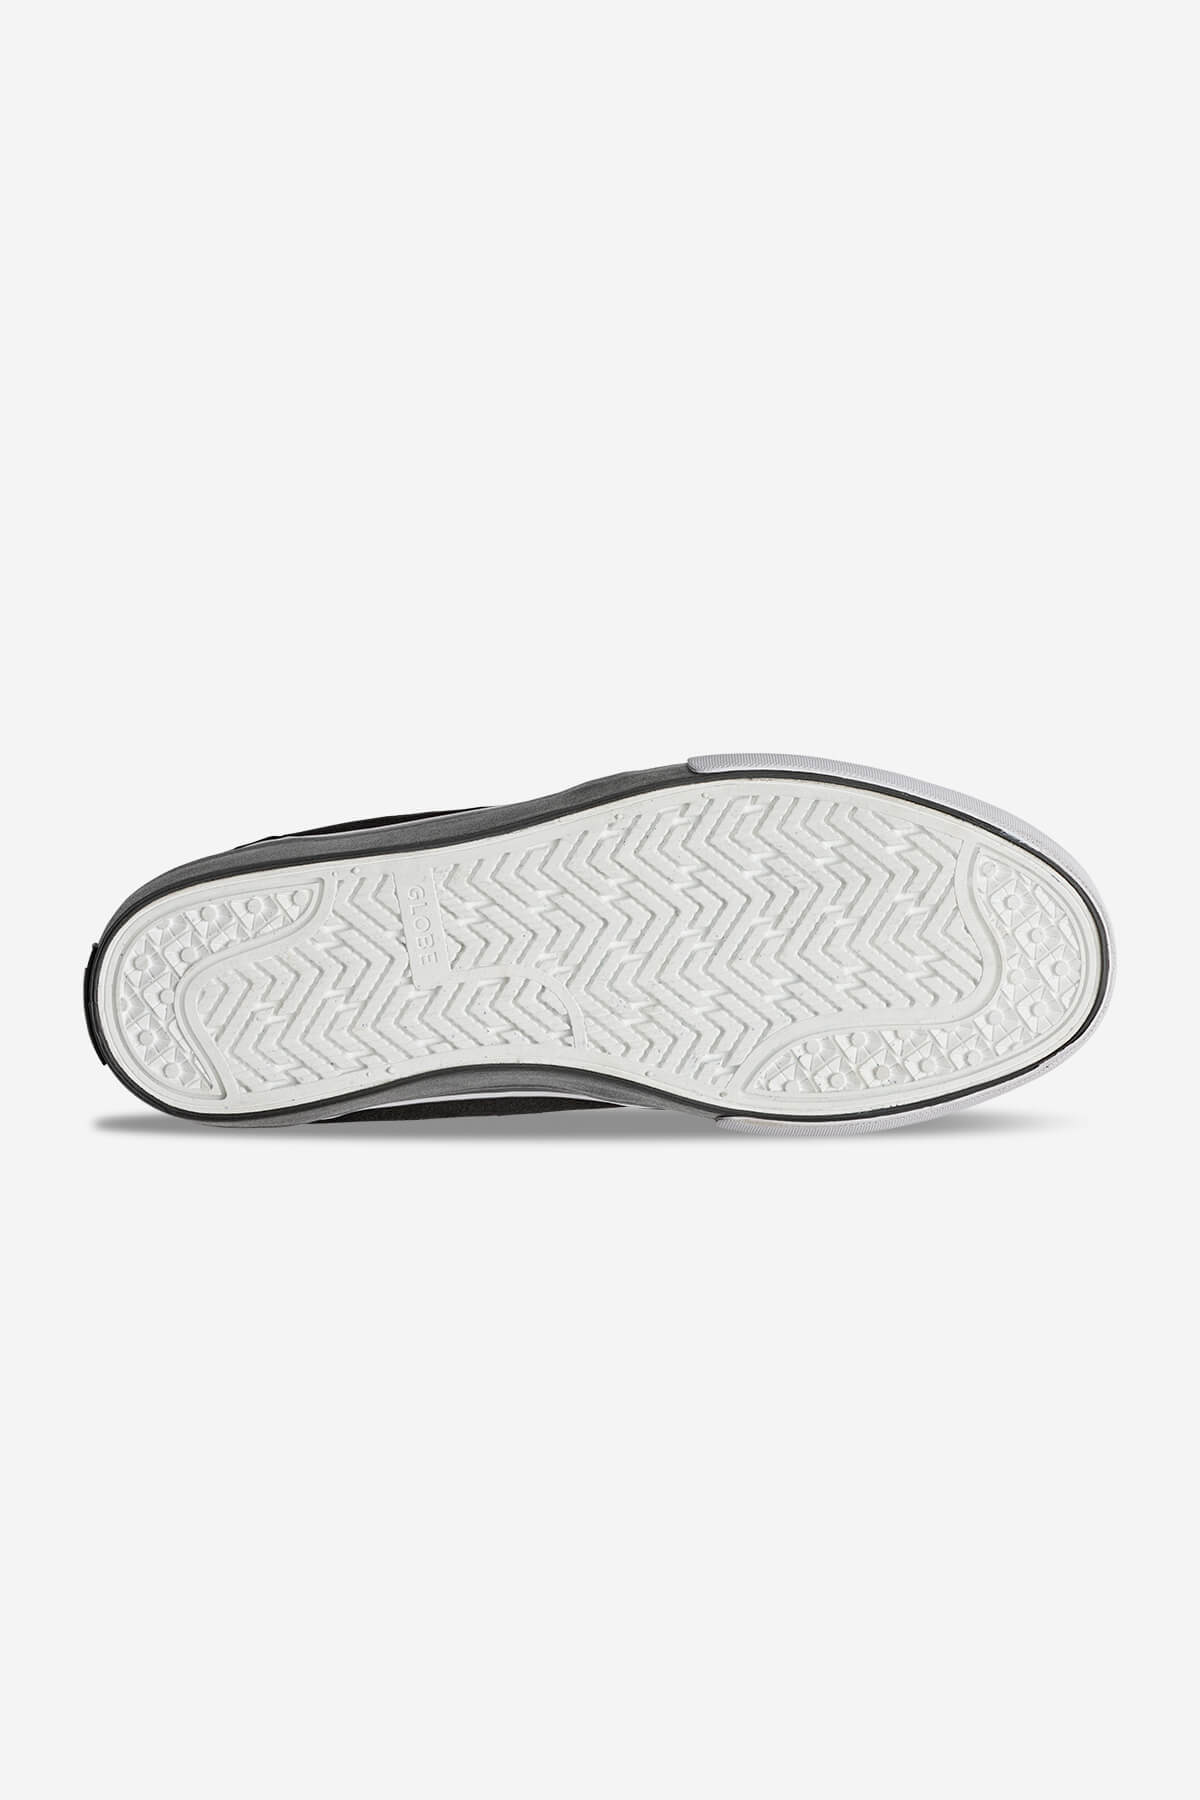 Globe - Mahalo - Black/Black/White - skateboard Schuhe